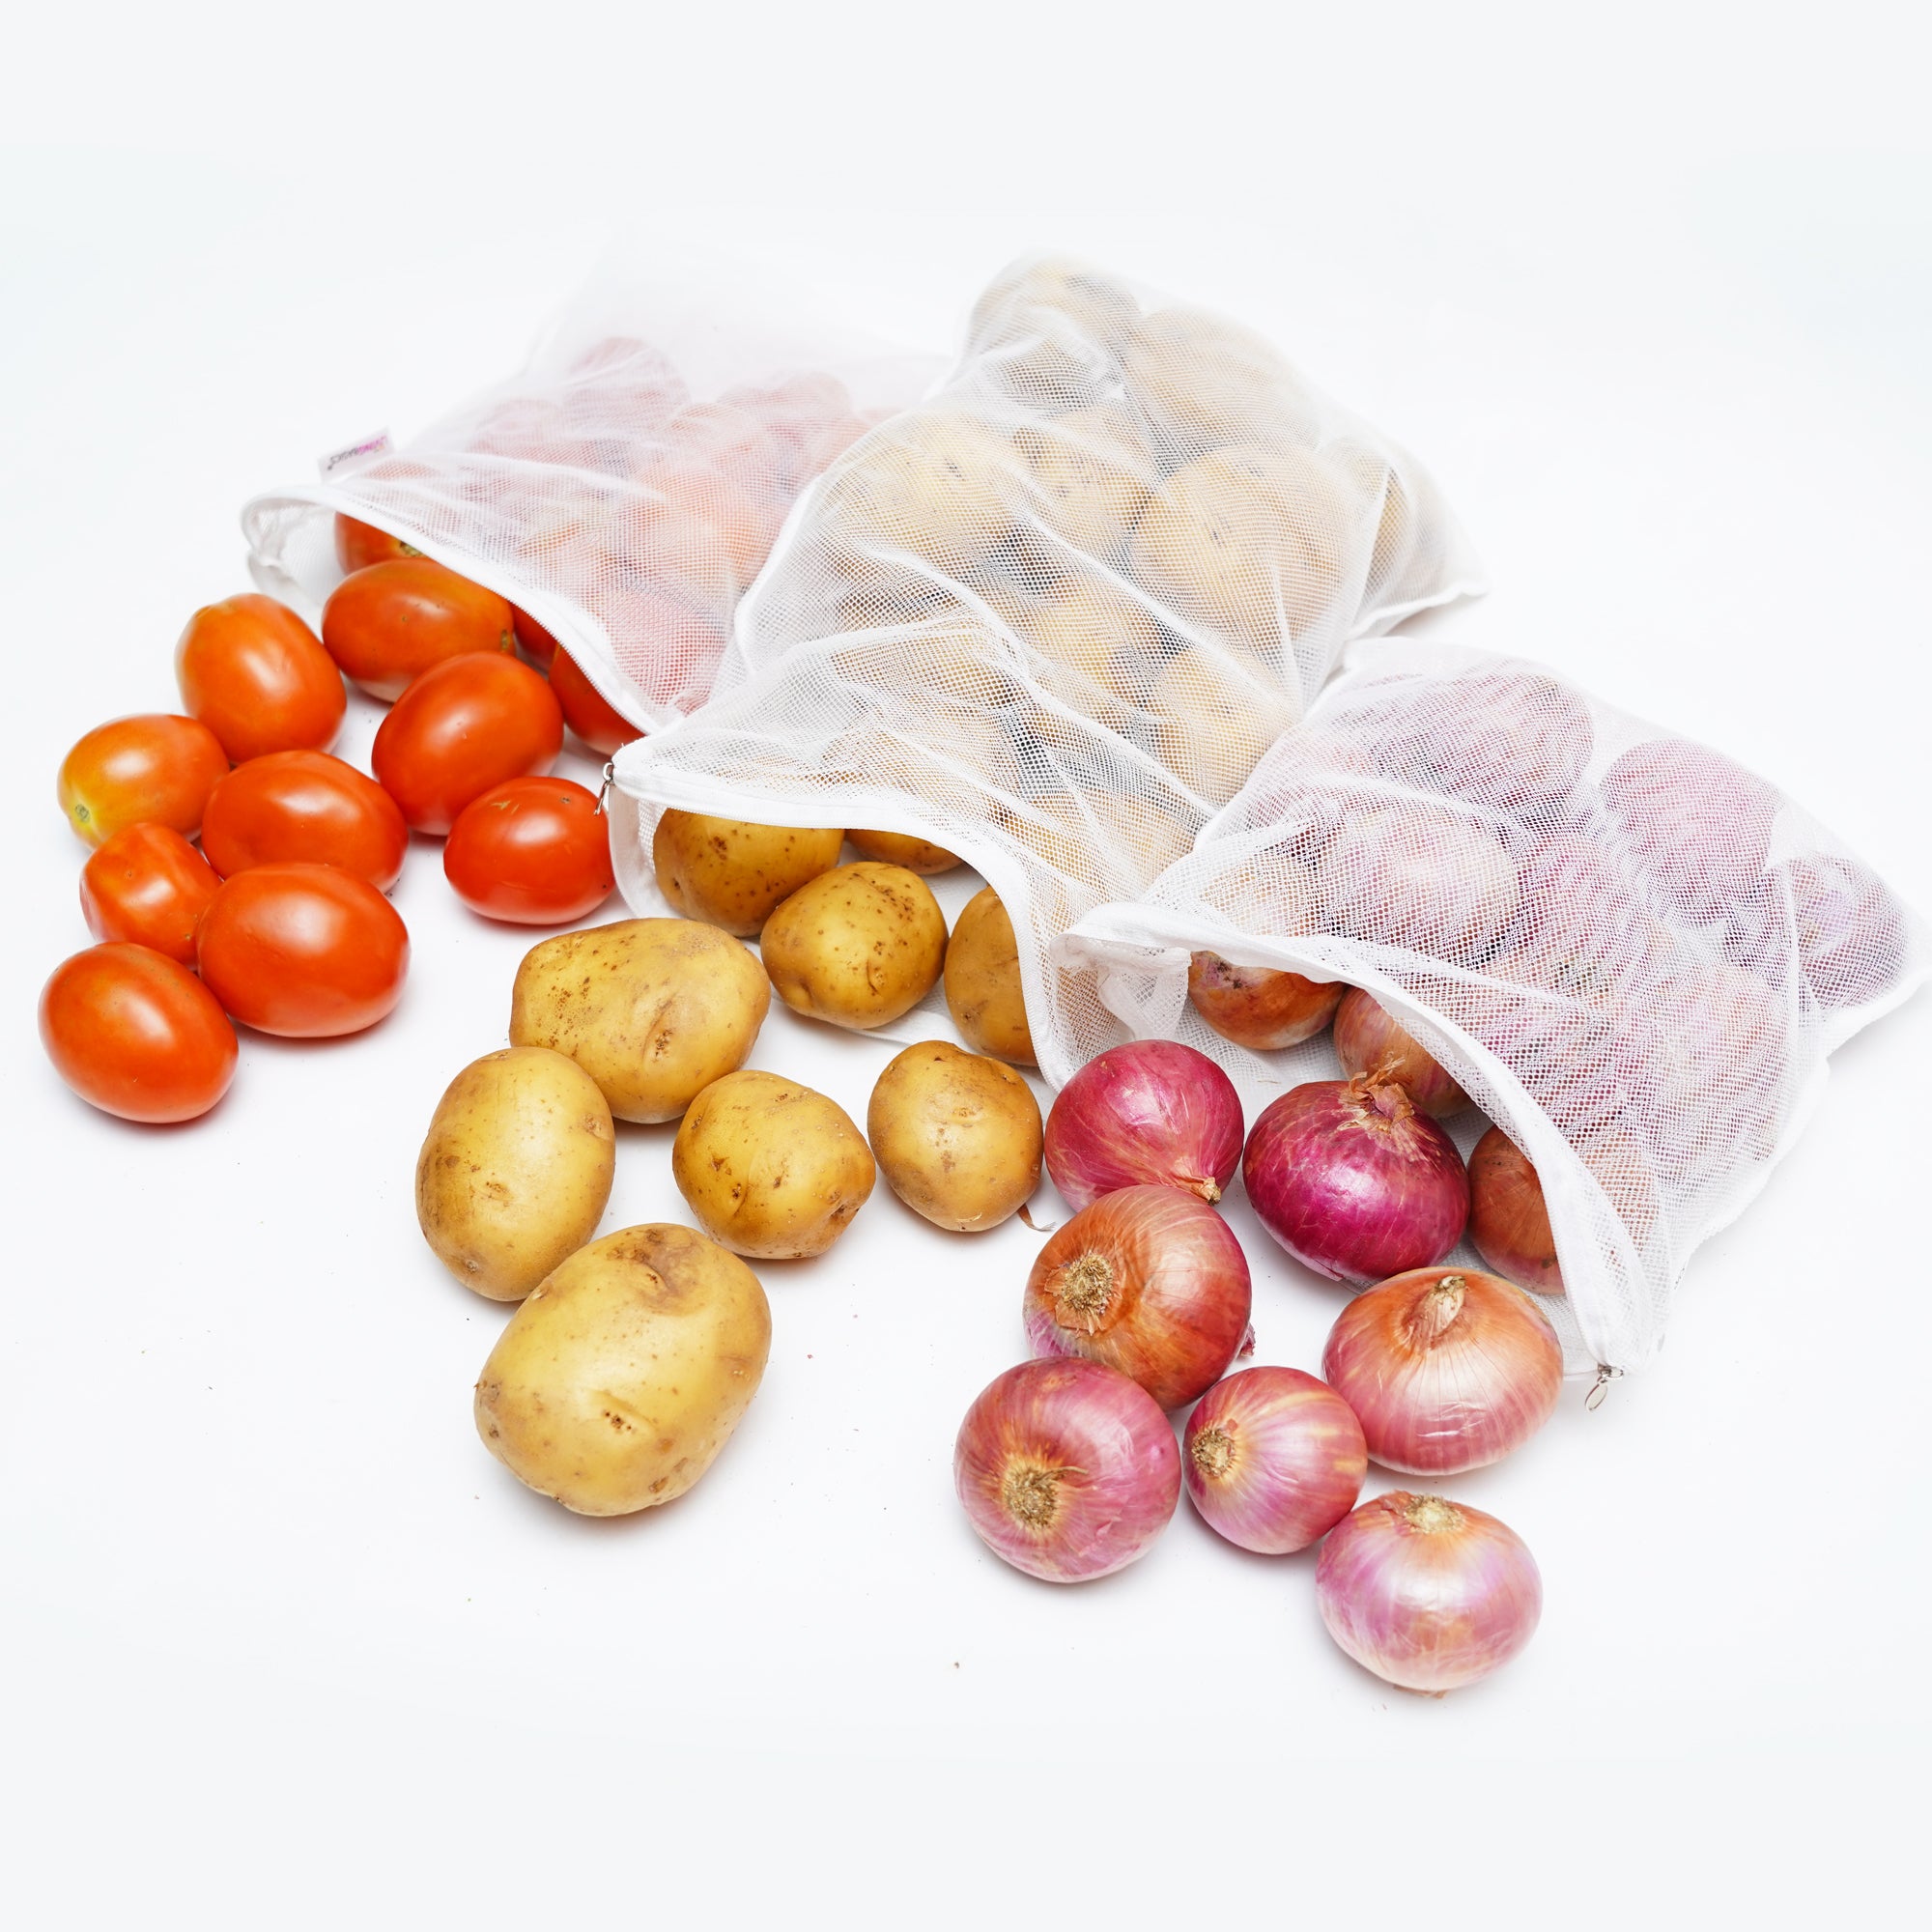 LivingBasics Premium Double Net Vegetable Bags For Fridge / Refrigerator - Vegetable Cover - Covers / Fresh Fruits Pouches For Kitchen - Mesh Organizer Bag (6 Pieces, White Net Bags)